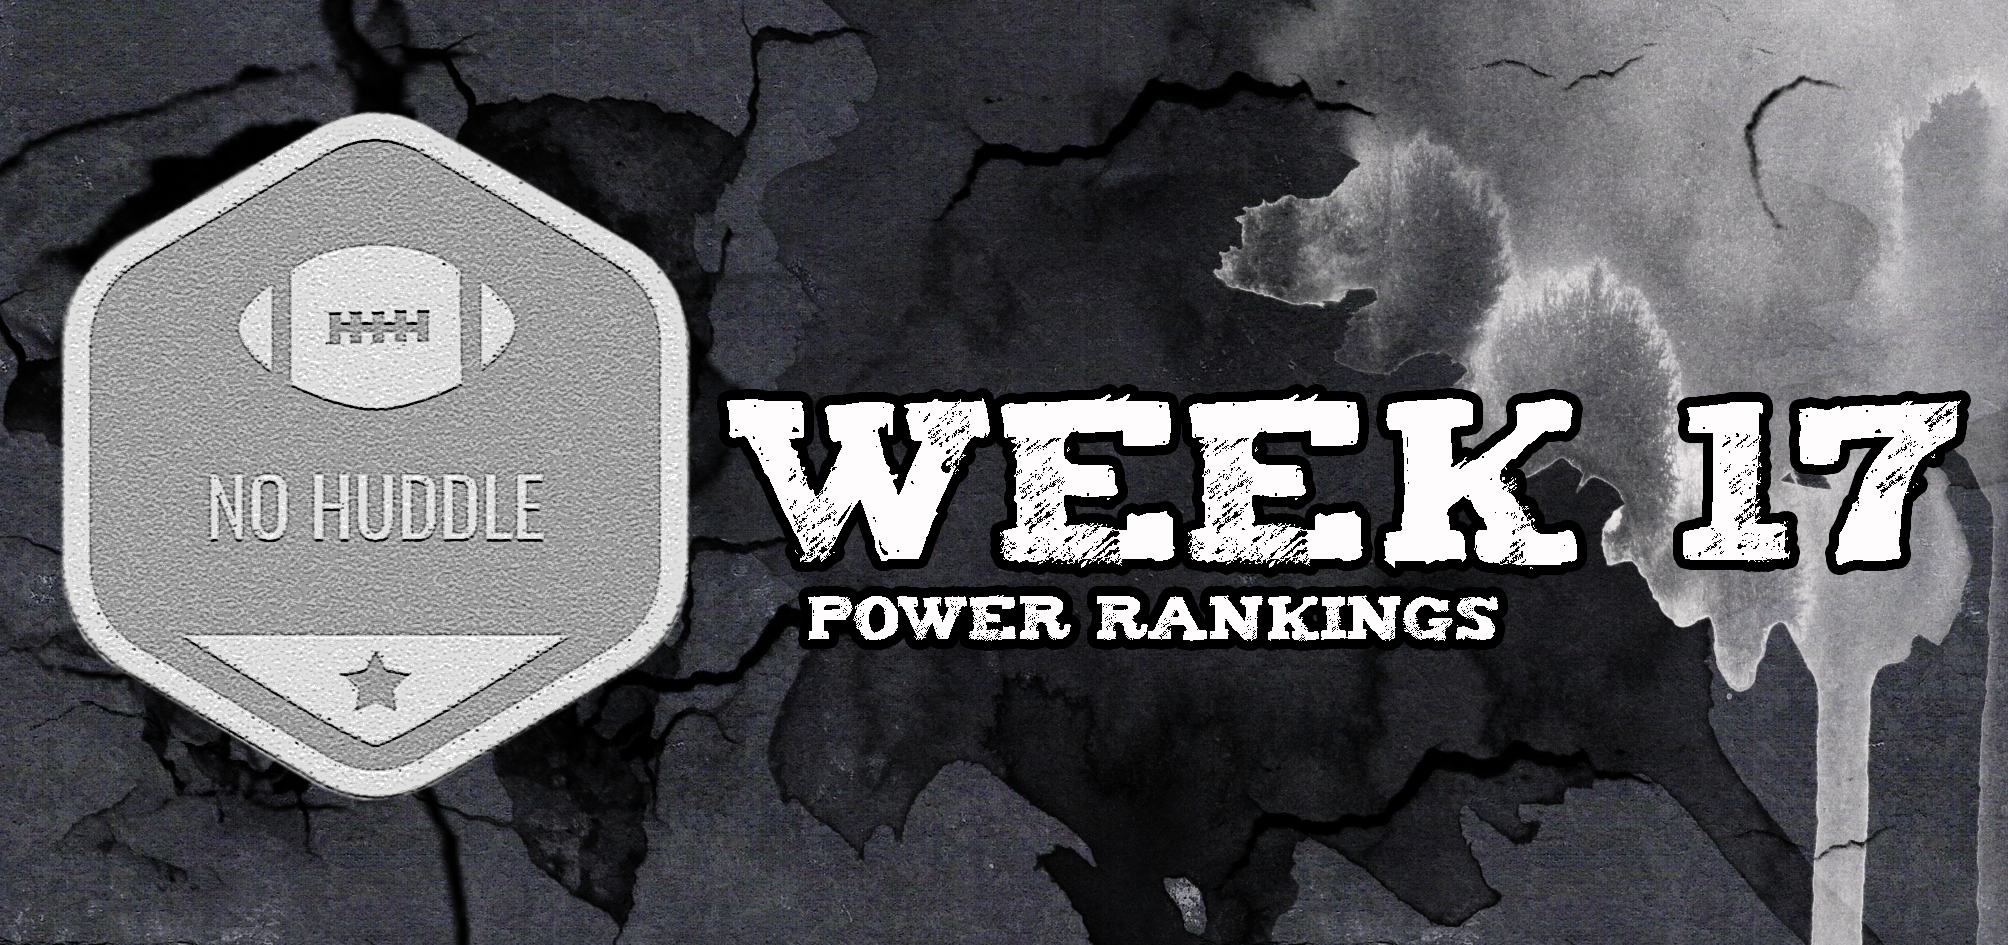 Power Rankings: Semana 17